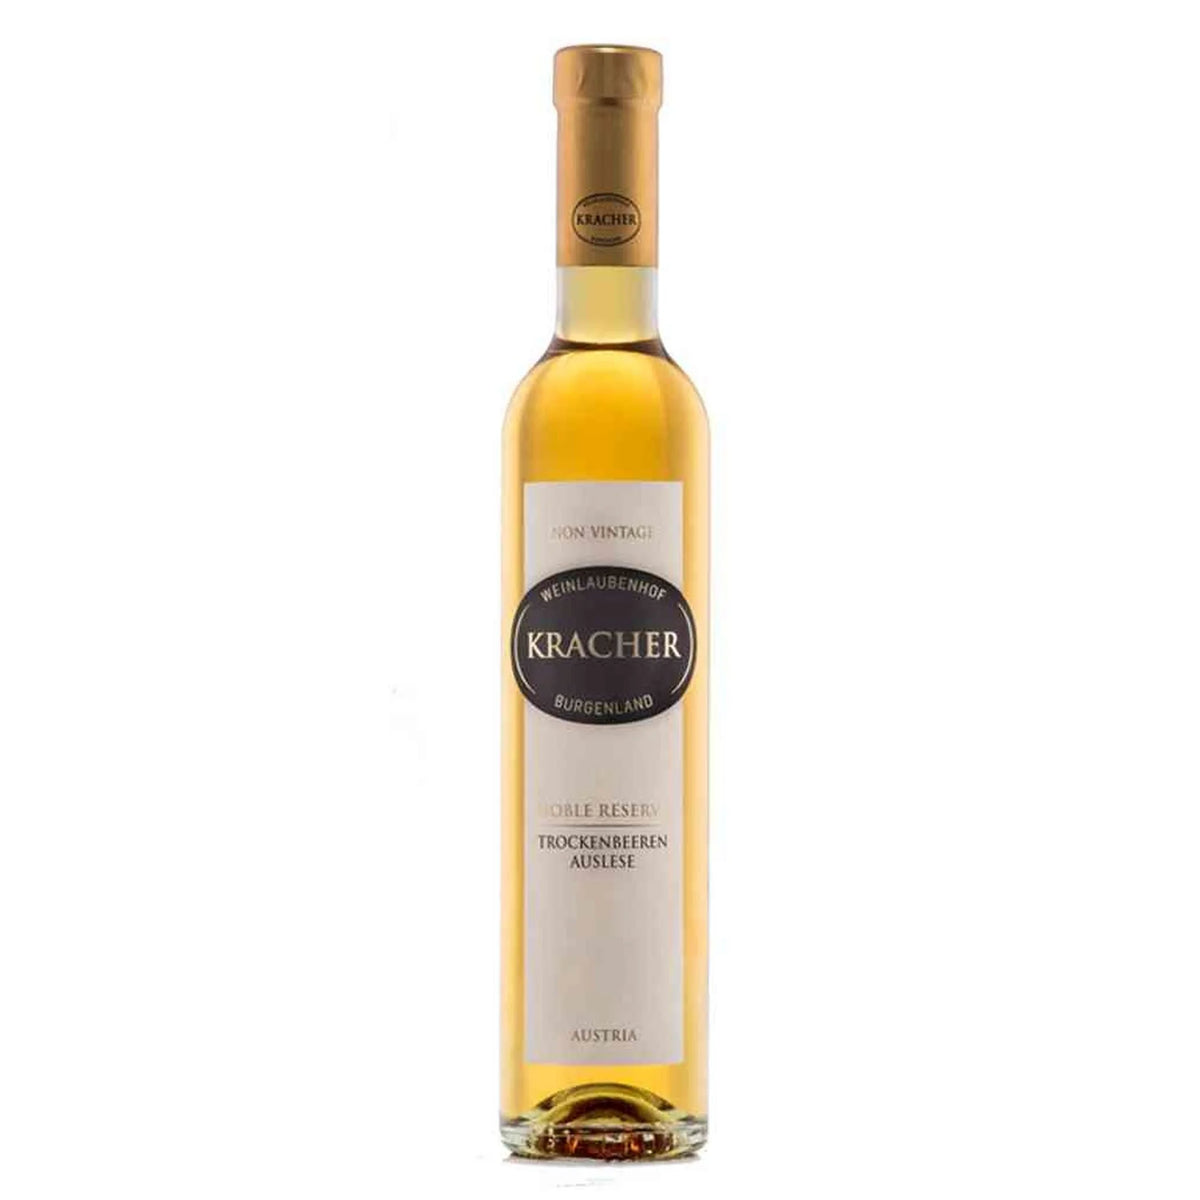 Weinlaubenhof Kracher-Süßwein-Chardonnay, Traminer, Welschriesling-N/V Noble Reserve Trockenbeerenauslese-WINECOM